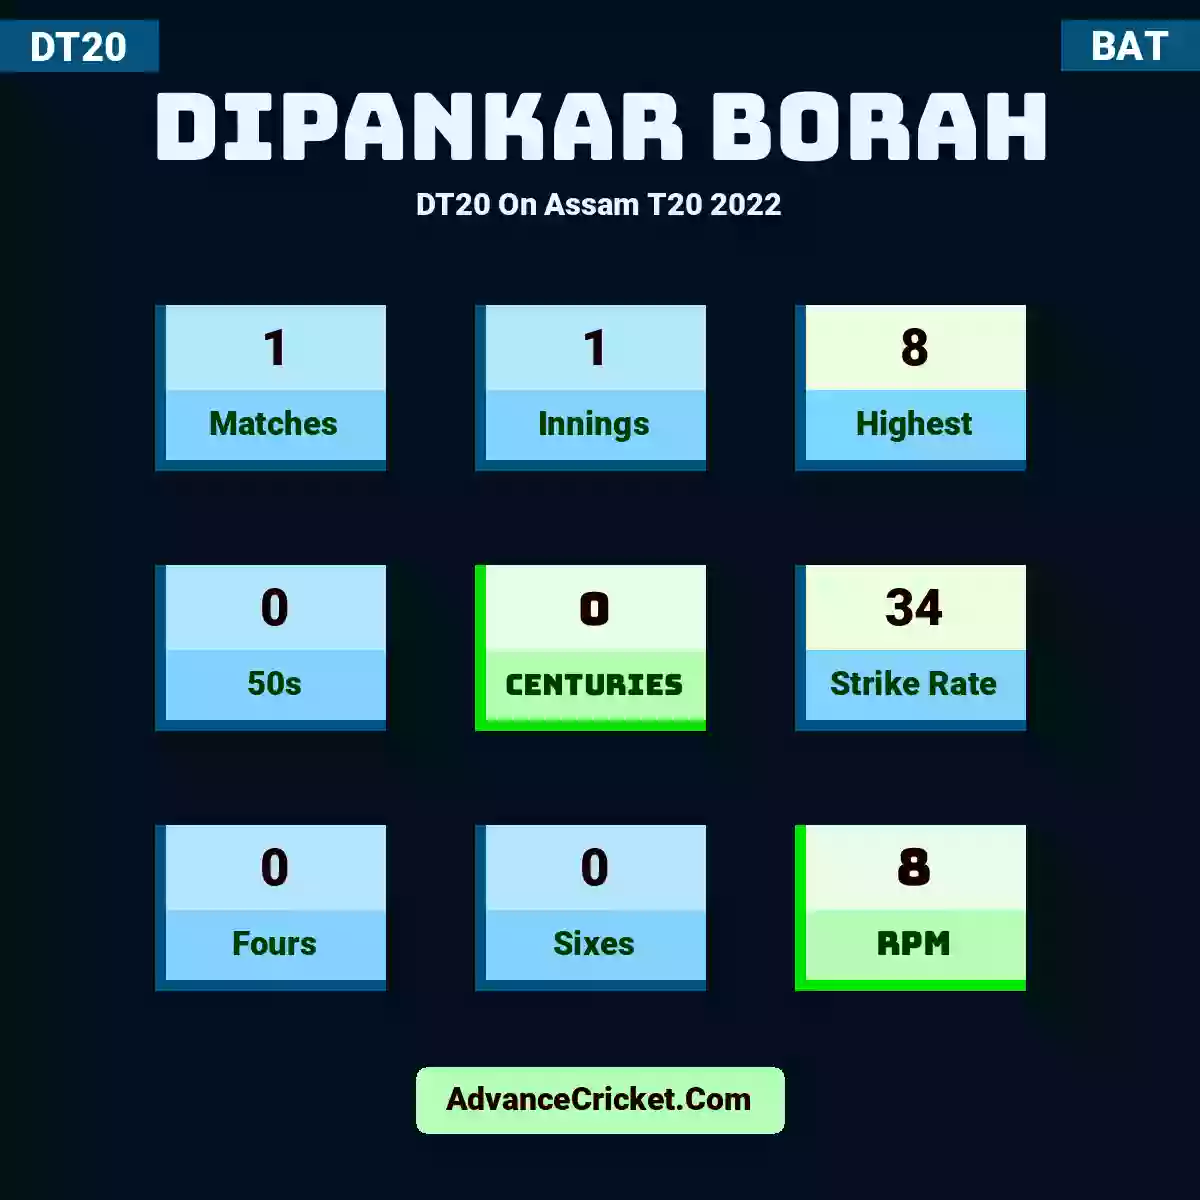 Dipankar Borah DT20  On Assam T20 2022, Dipankar Borah played 1 matches, scored 8 runs as highest, 0 half-centuries, and 0 centuries, with a strike rate of 34. d.borah hit 0 fours and 0 sixes, with an RPM of 8.